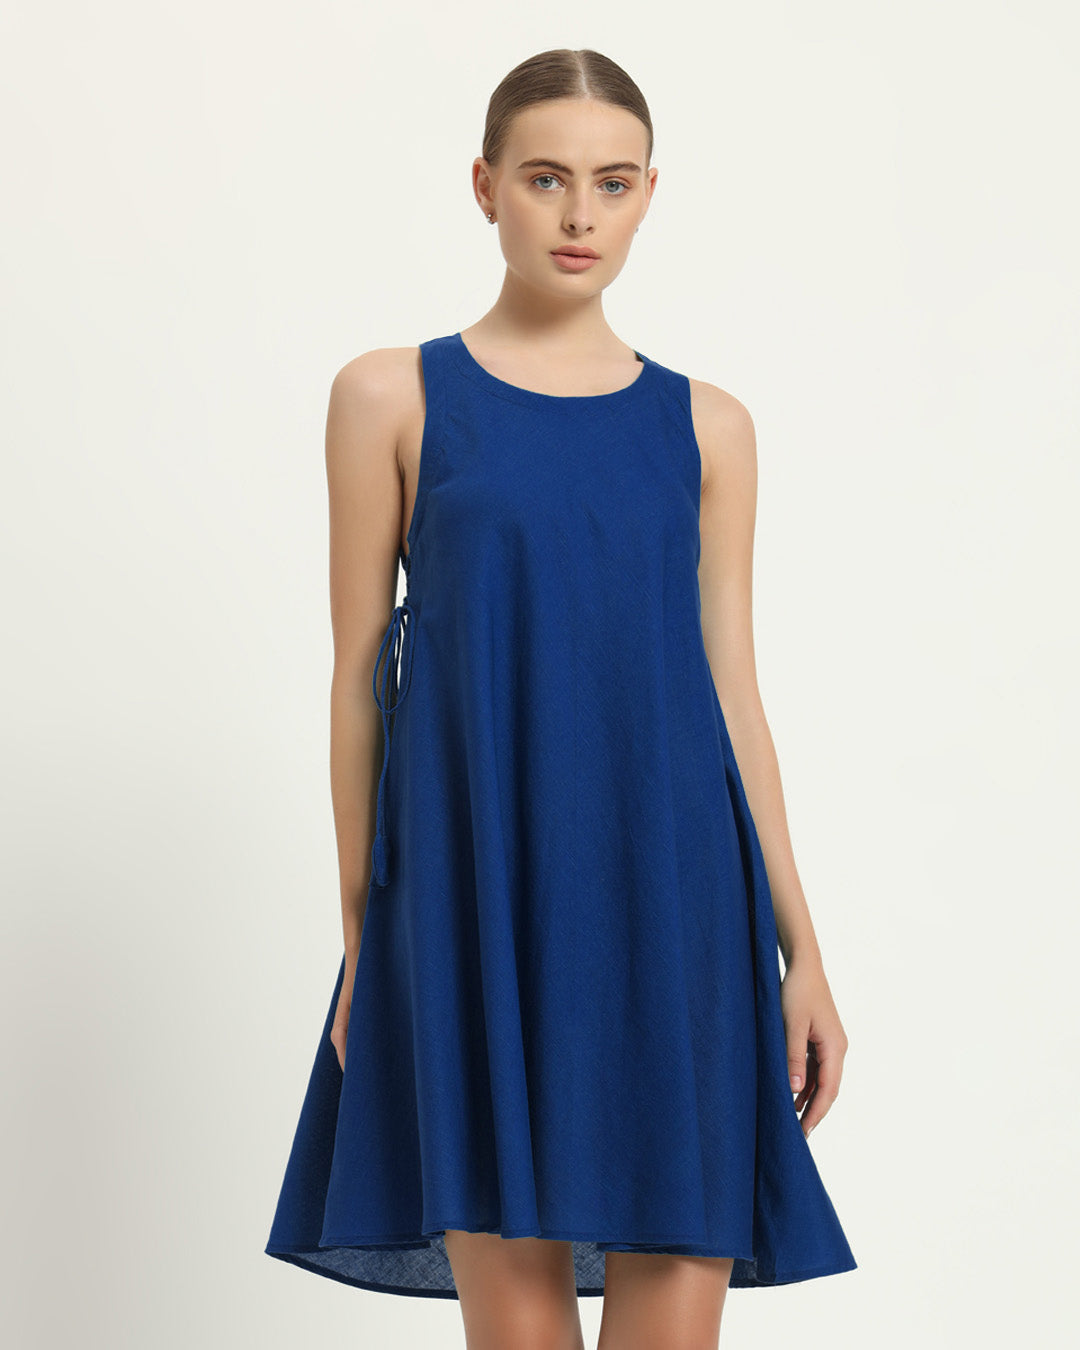 The Rhede Cobalt Cotton Dress